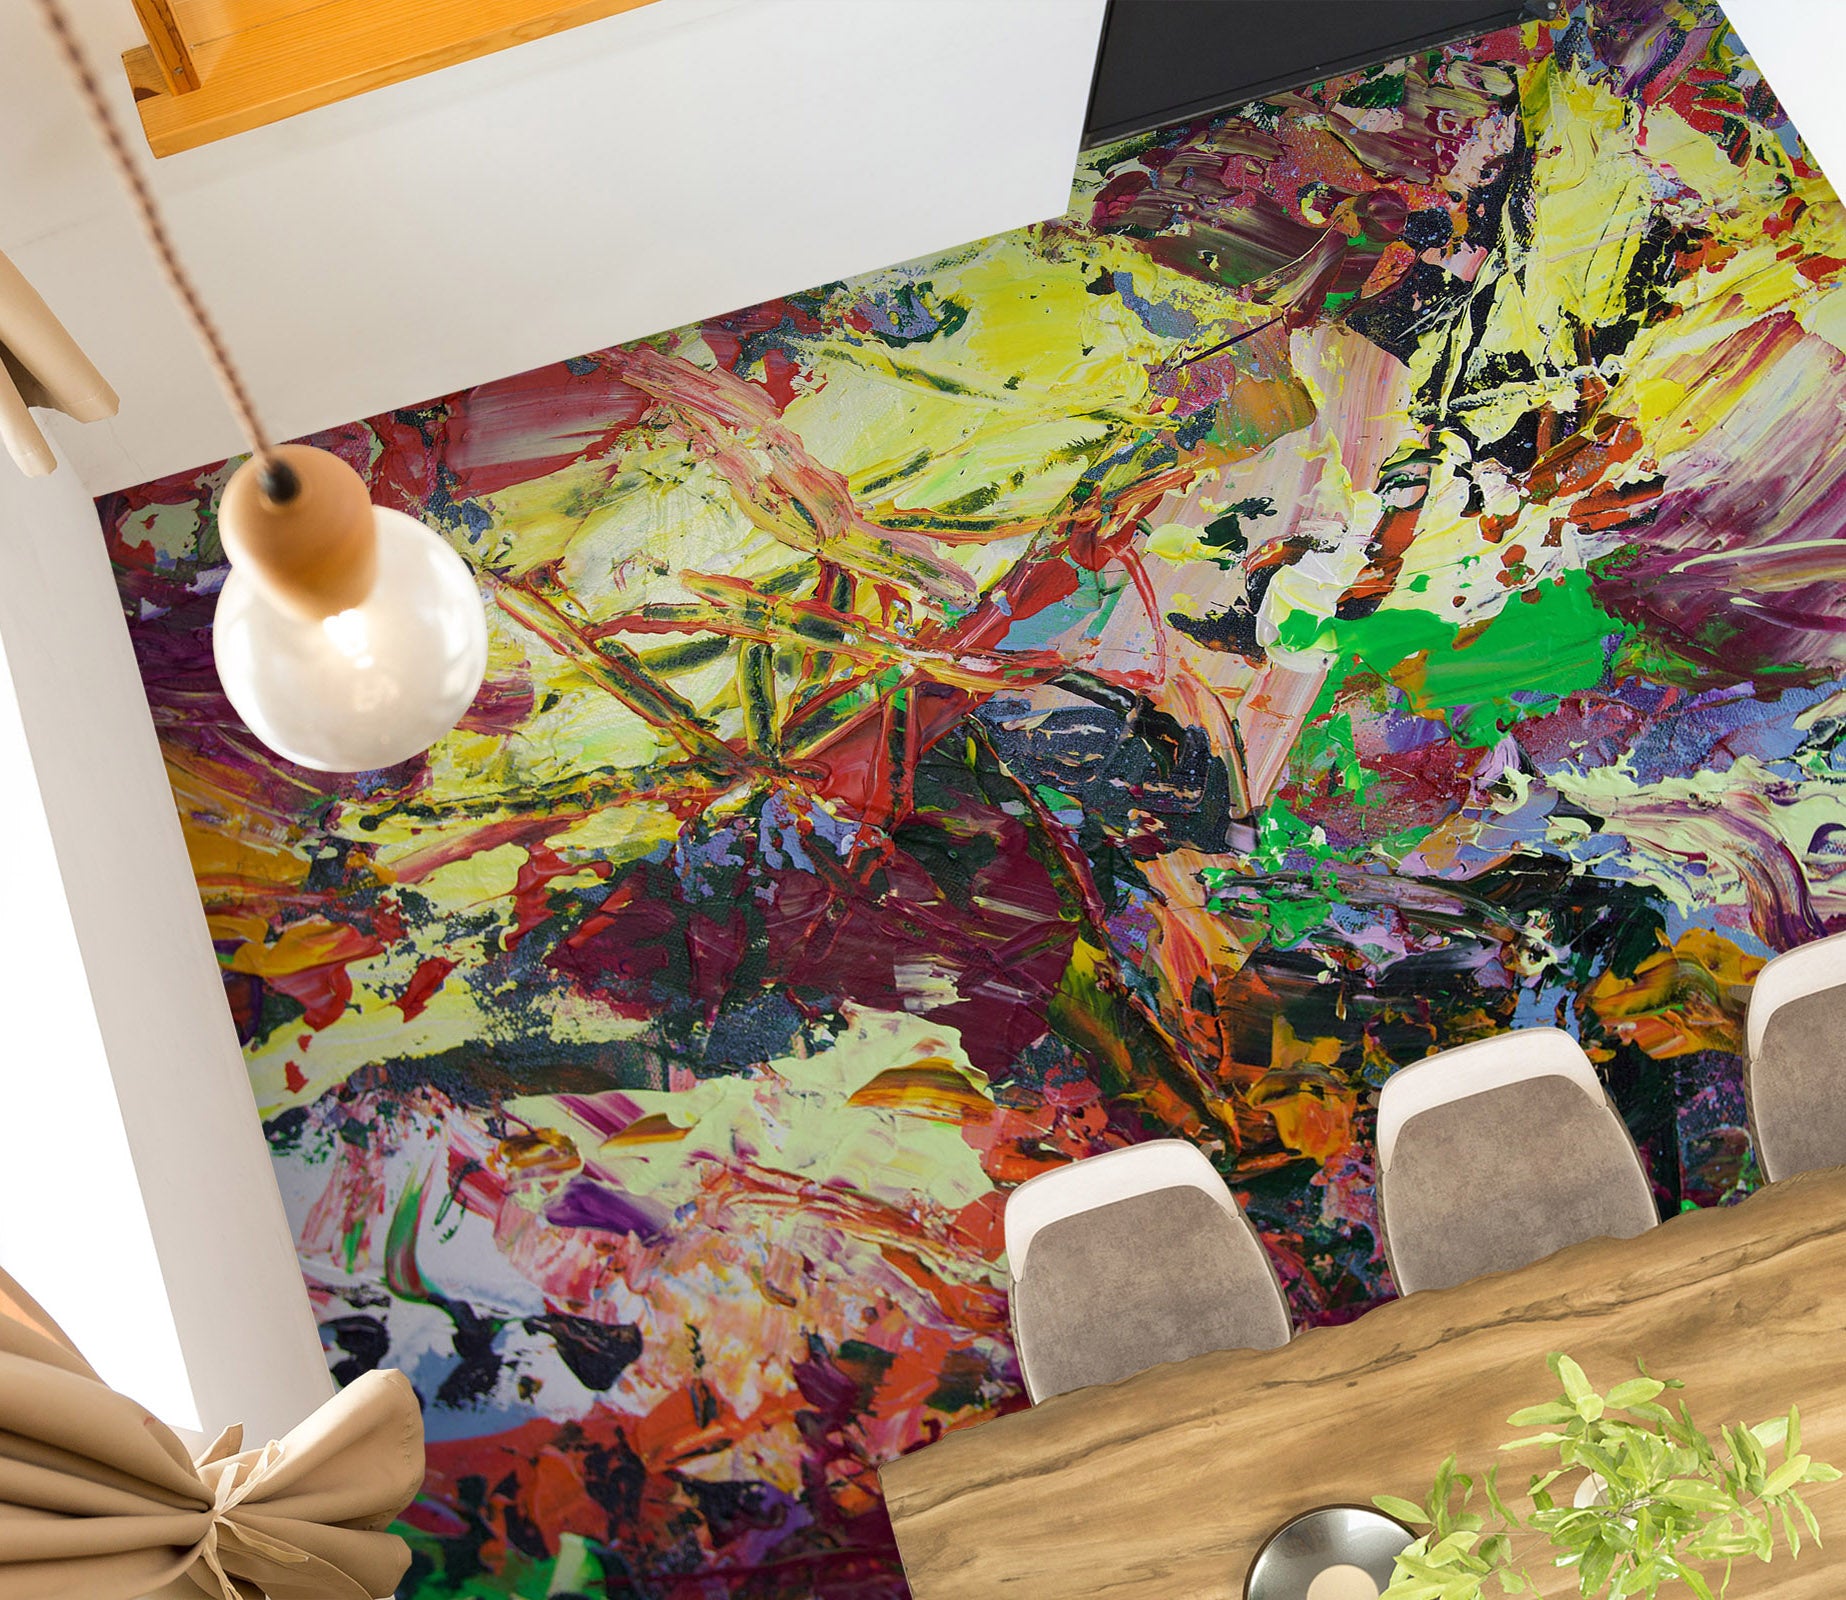 3D Color Paint Texture 9940 Allan P. Friedlander Floor Mural  Wallpaper Murals Self-Adhesive Removable Print Epoxy